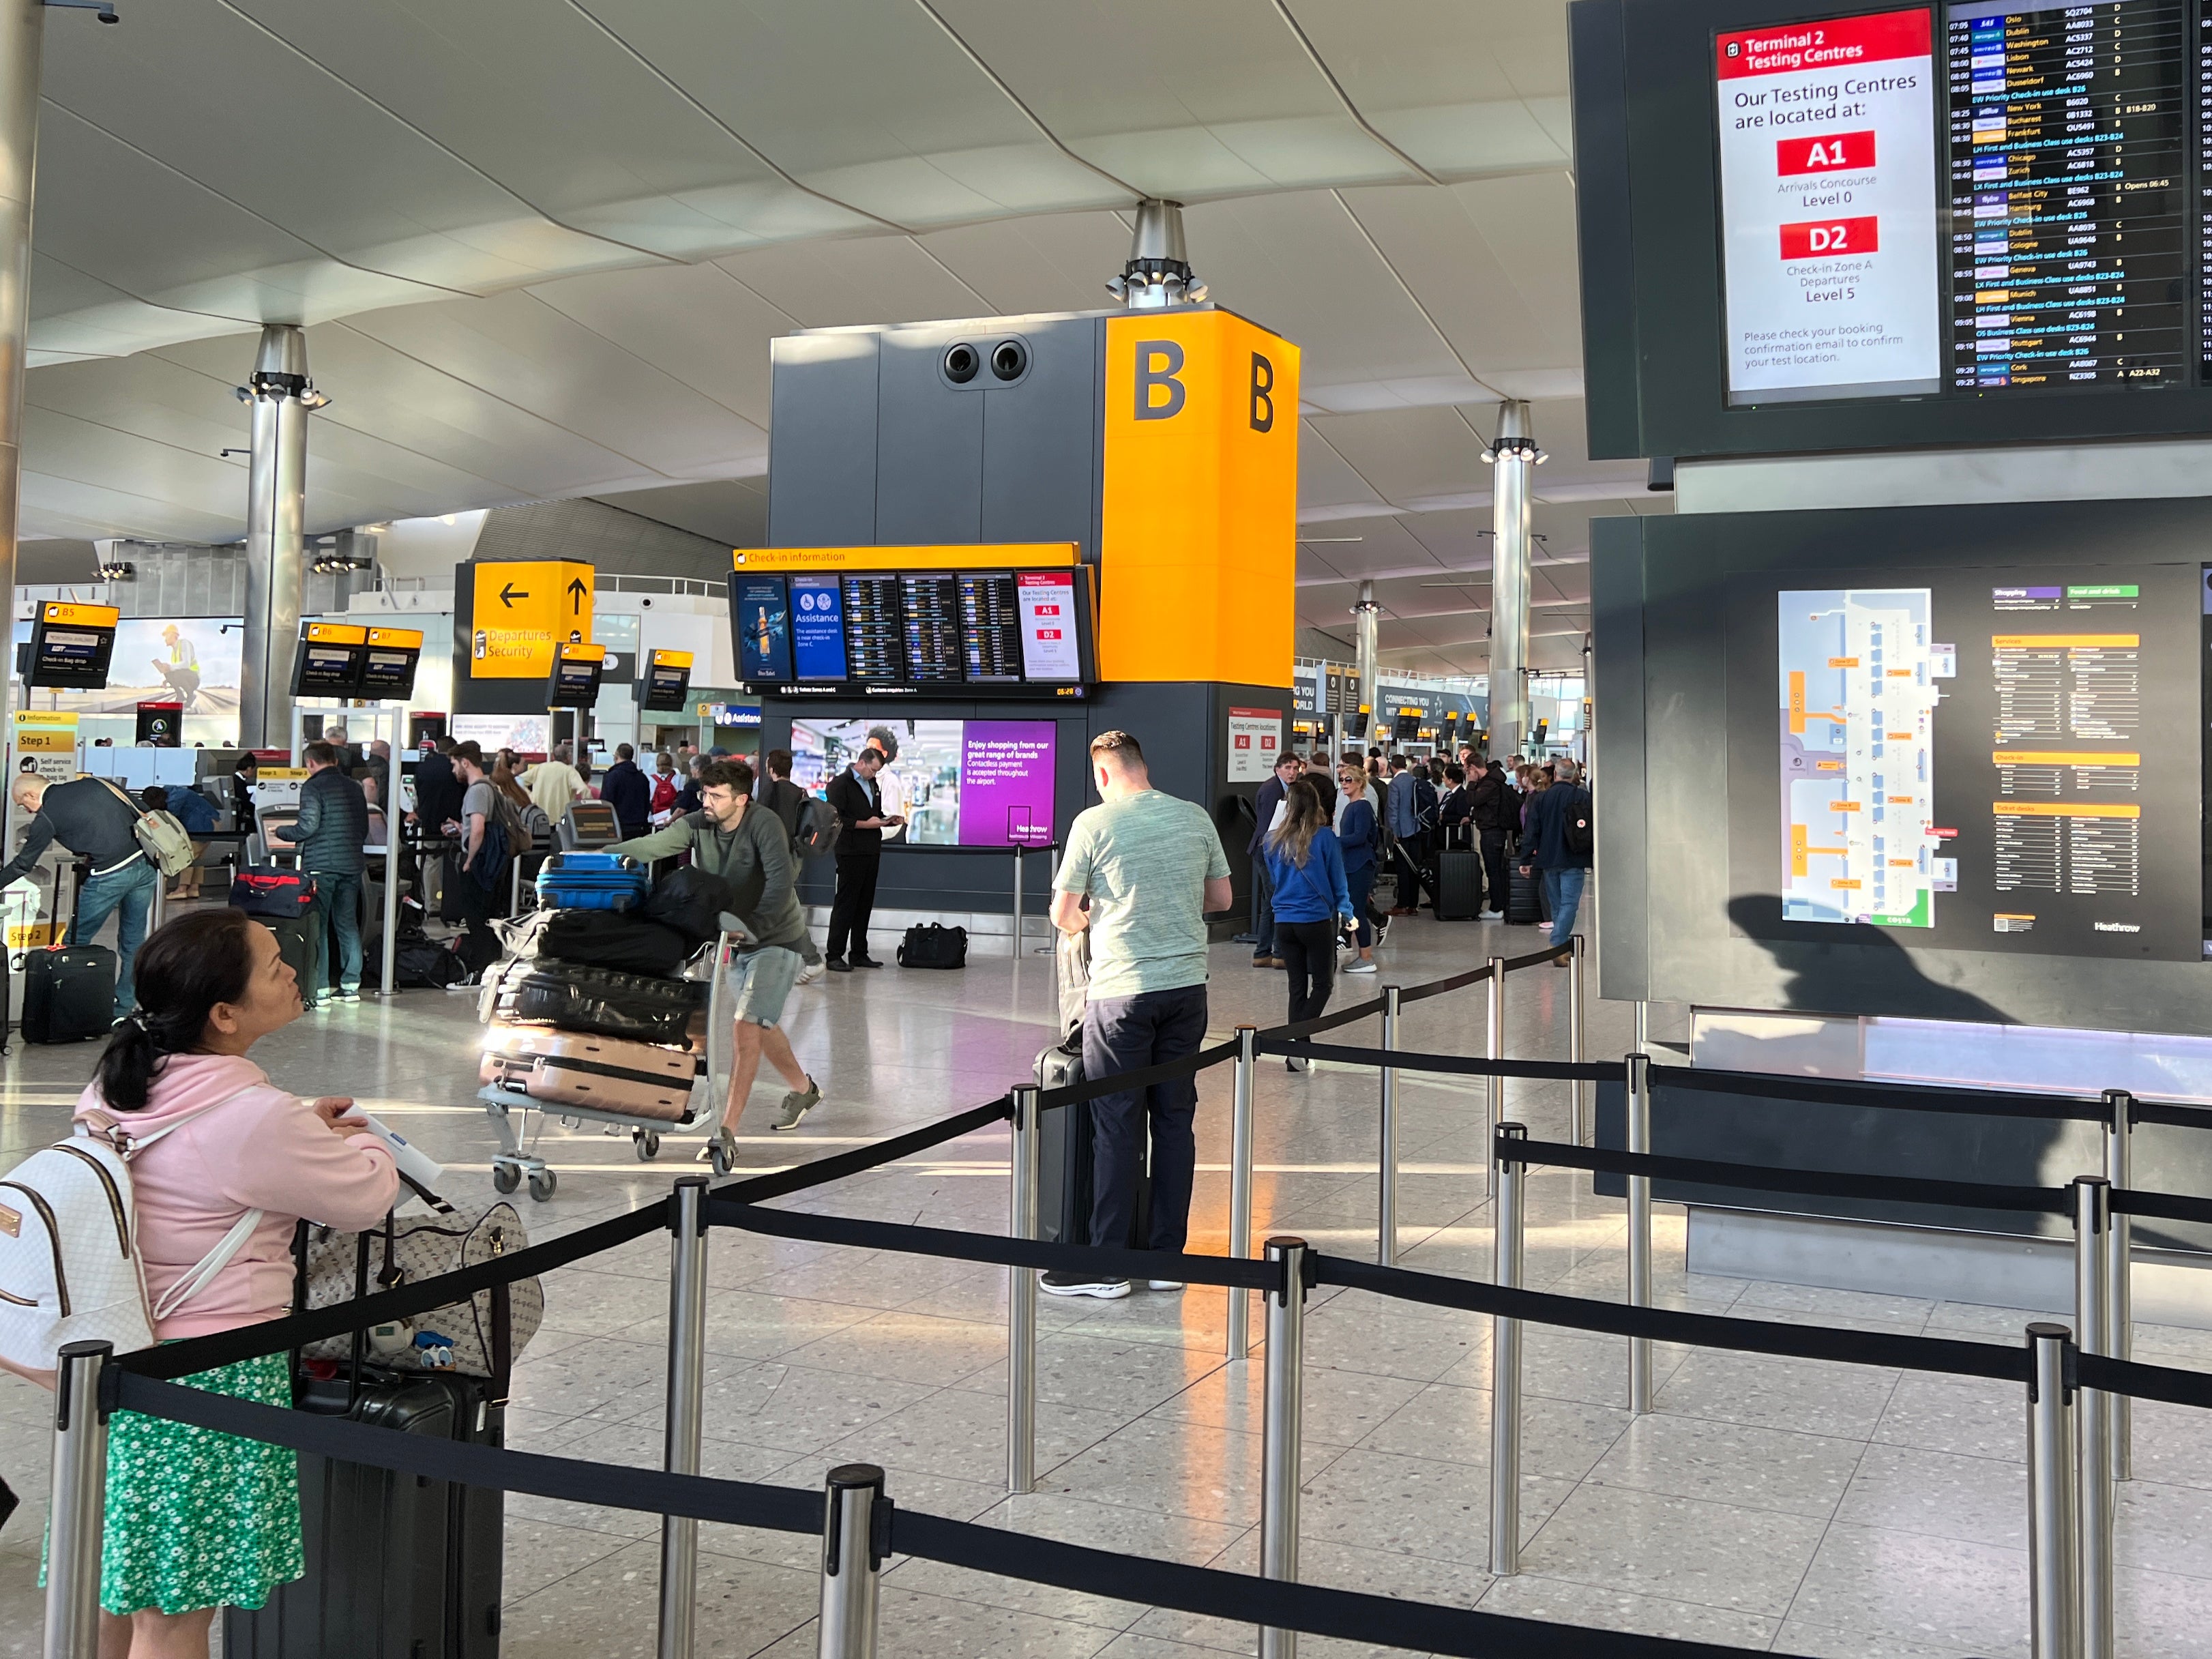 Departing soon: passengers at Heathrow Terminal 2